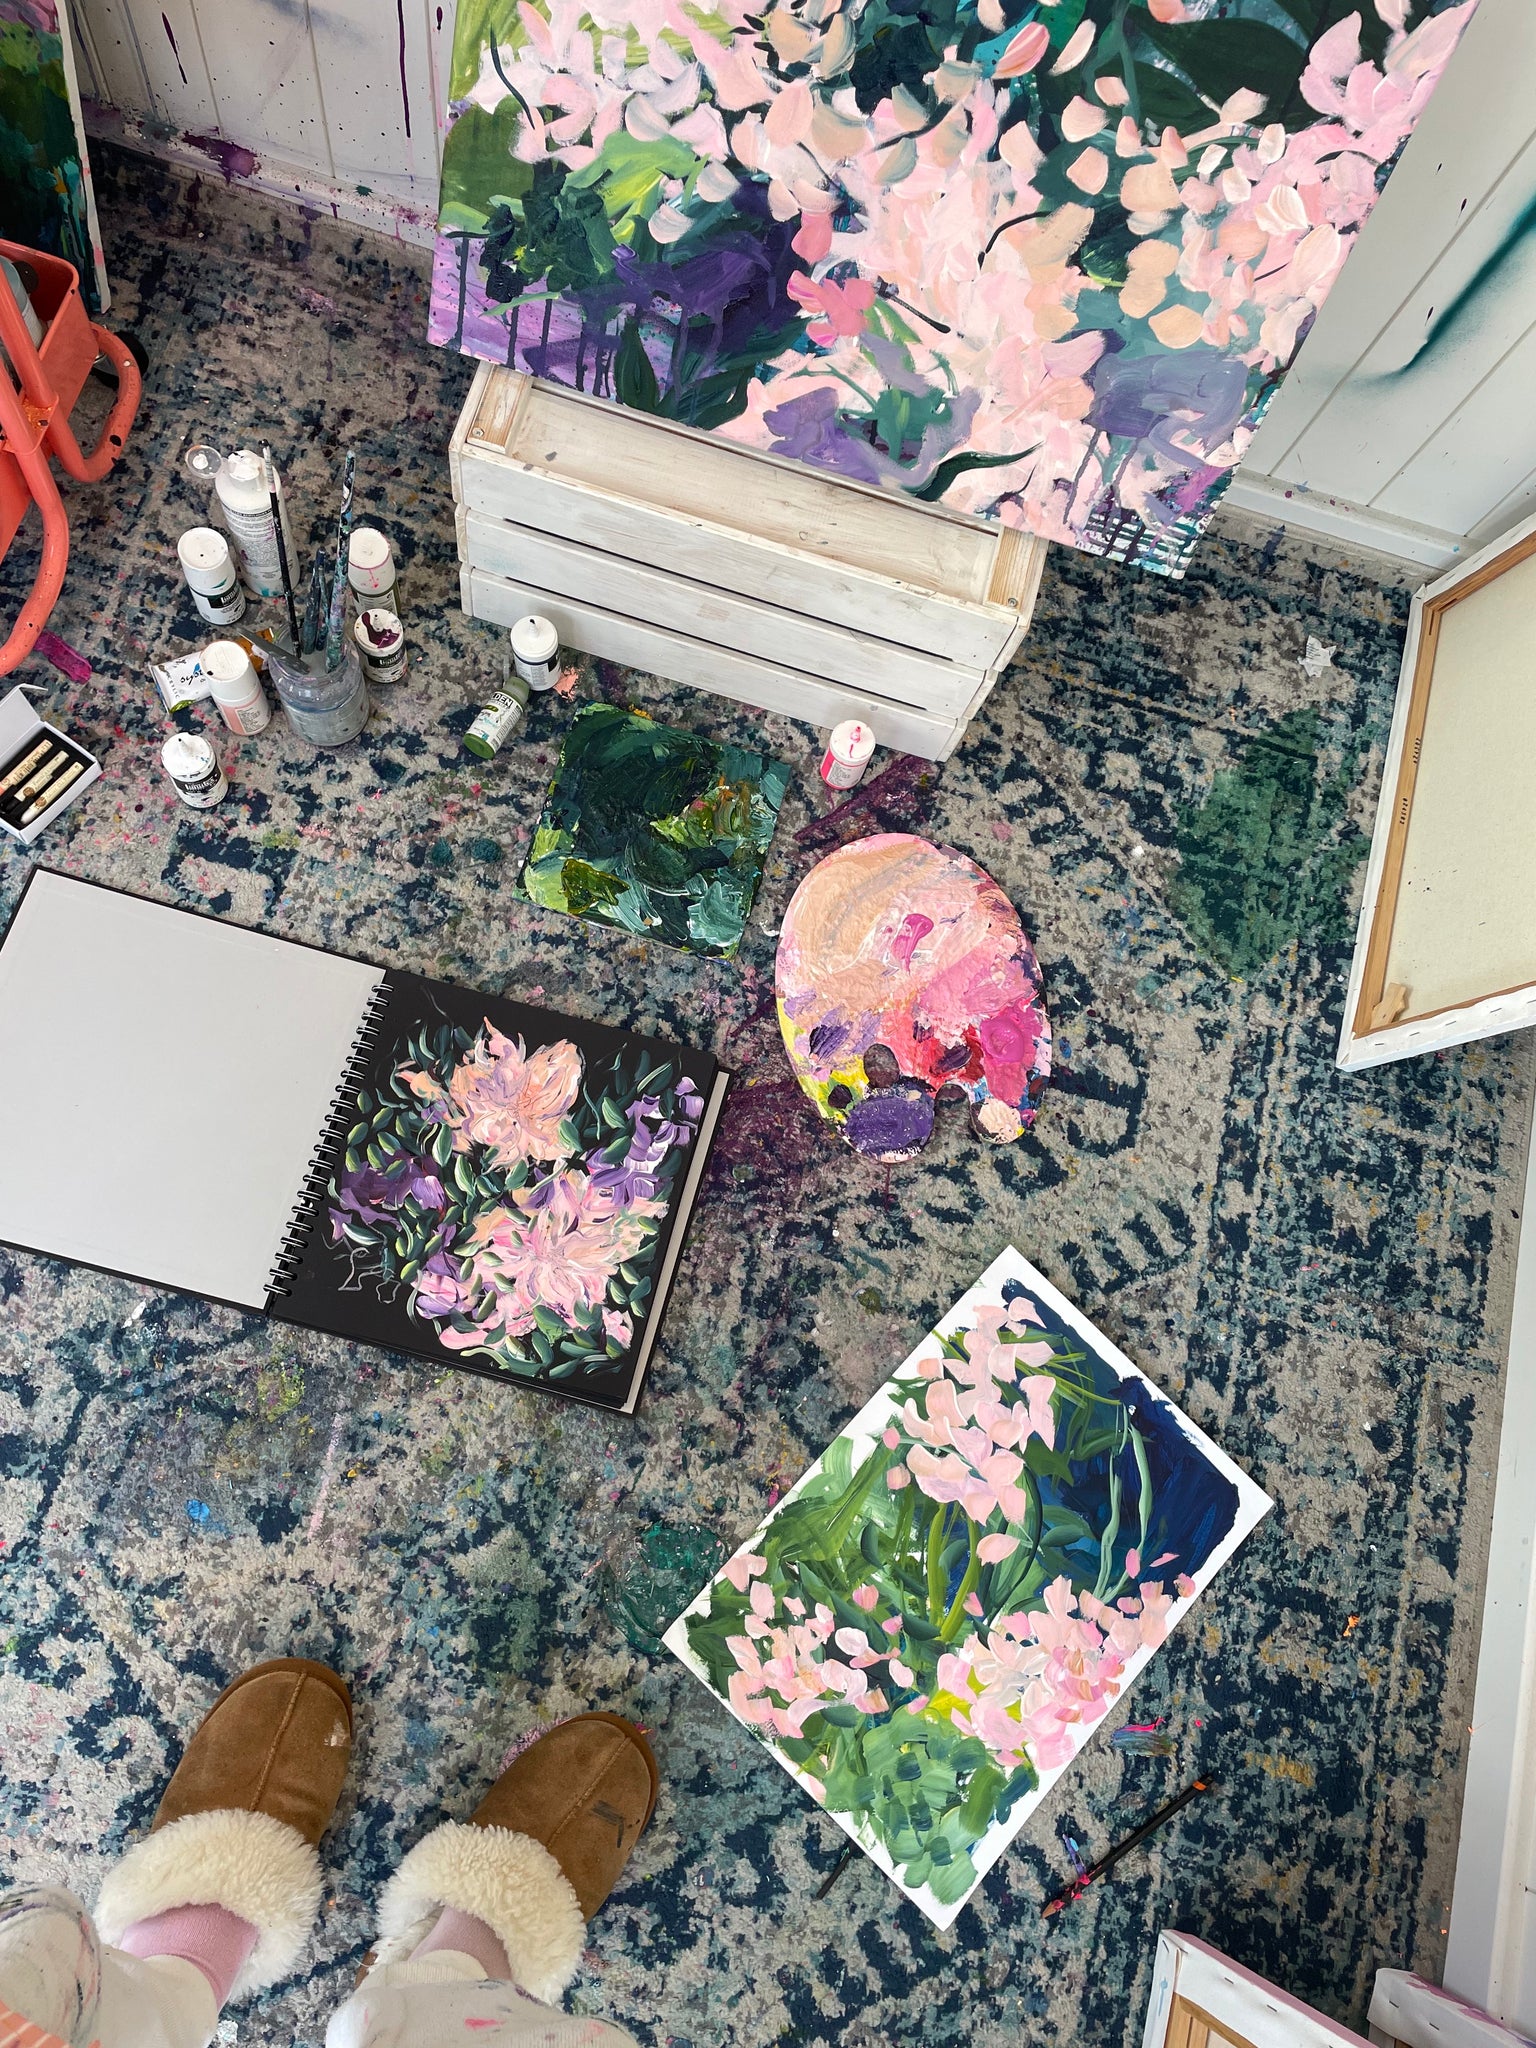 artist studio with paintings on the floor